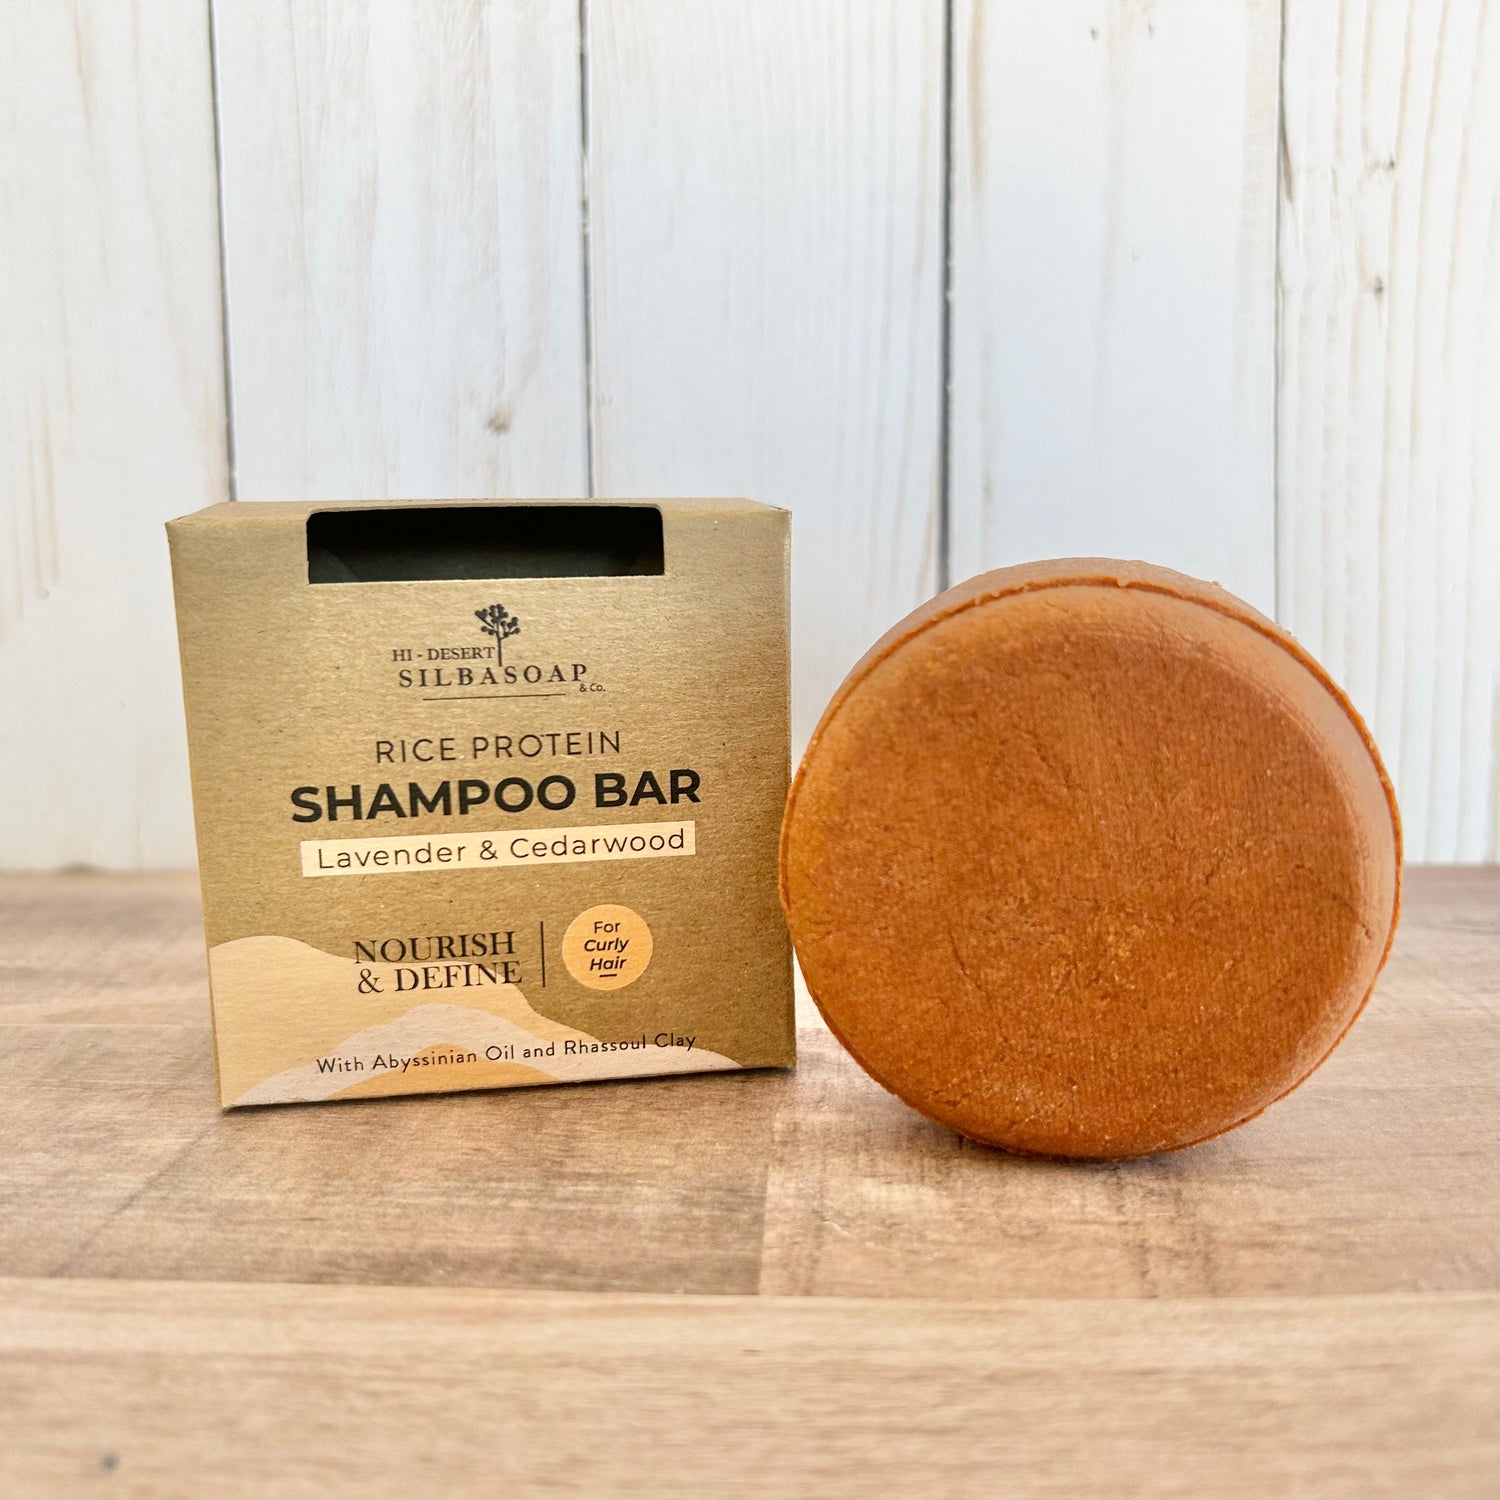 Shampoo bar for curly hair with box